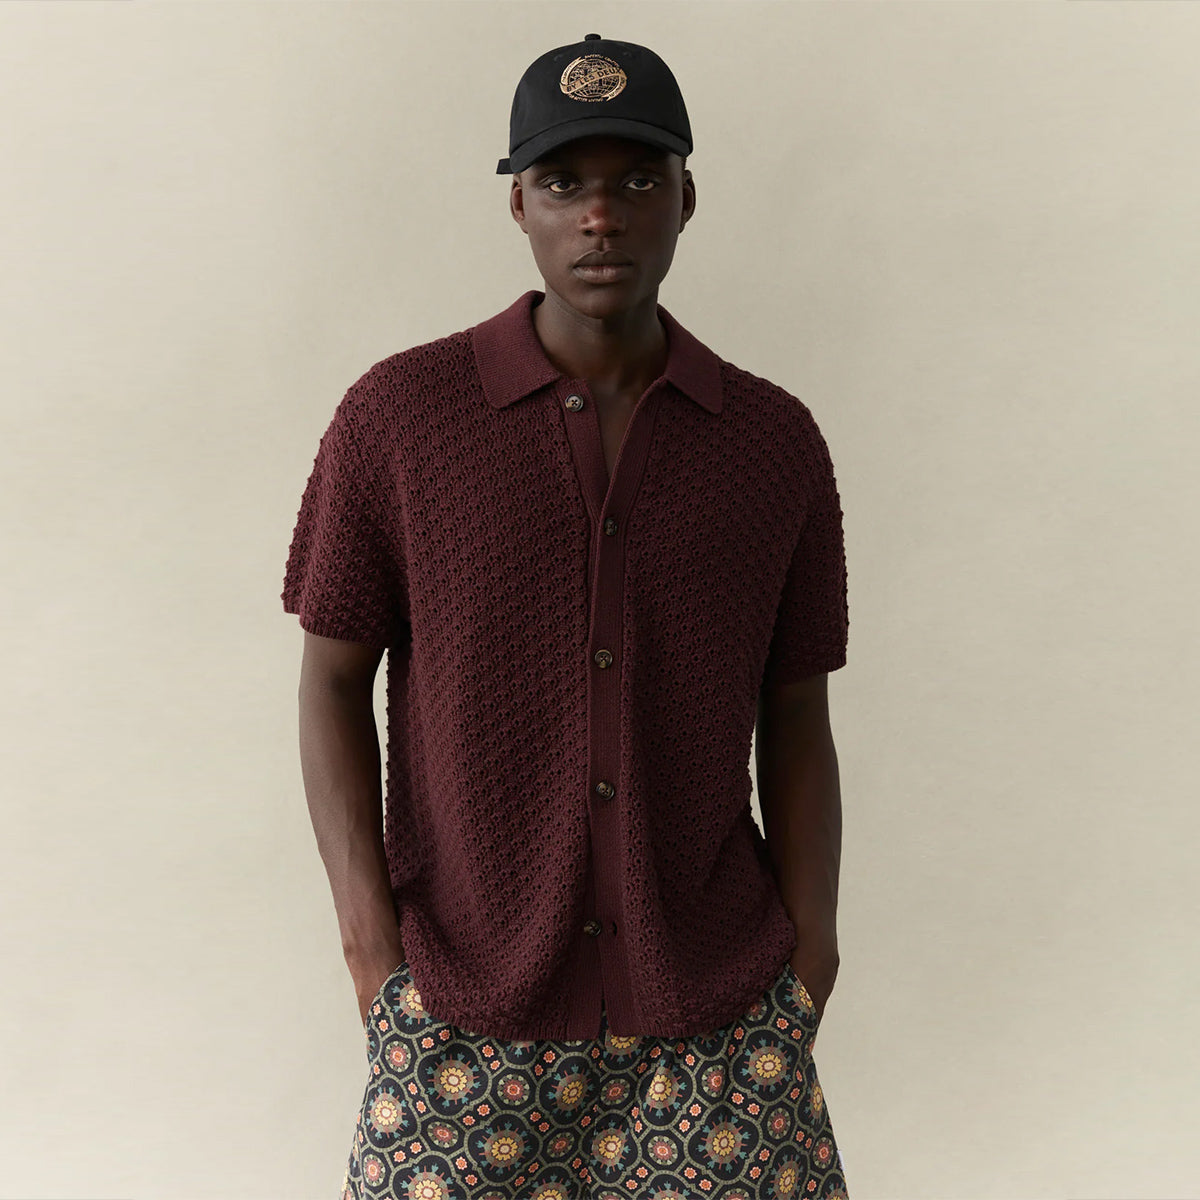 Gideon Knitted S/S Polo Shirt - Dark Burgundy